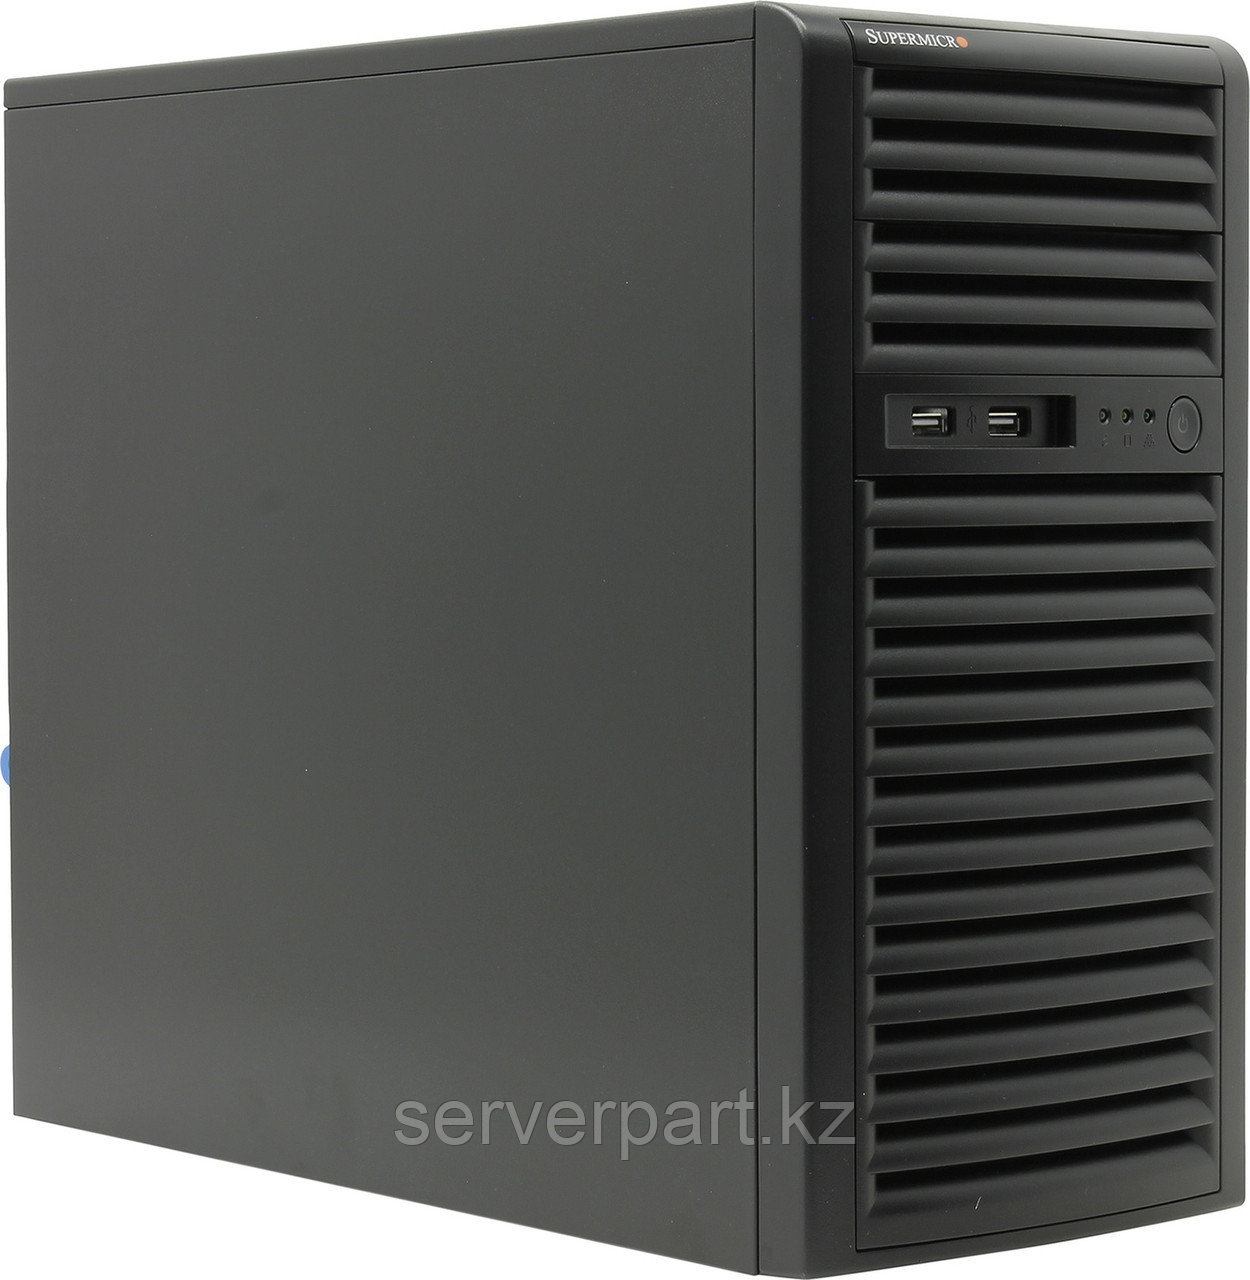 Сервер Supermicro SYS-5039C (Tower 4LFF)/4-core intel xeon E2224 (3.4GHz)/24GB EUDIMM, фото 1